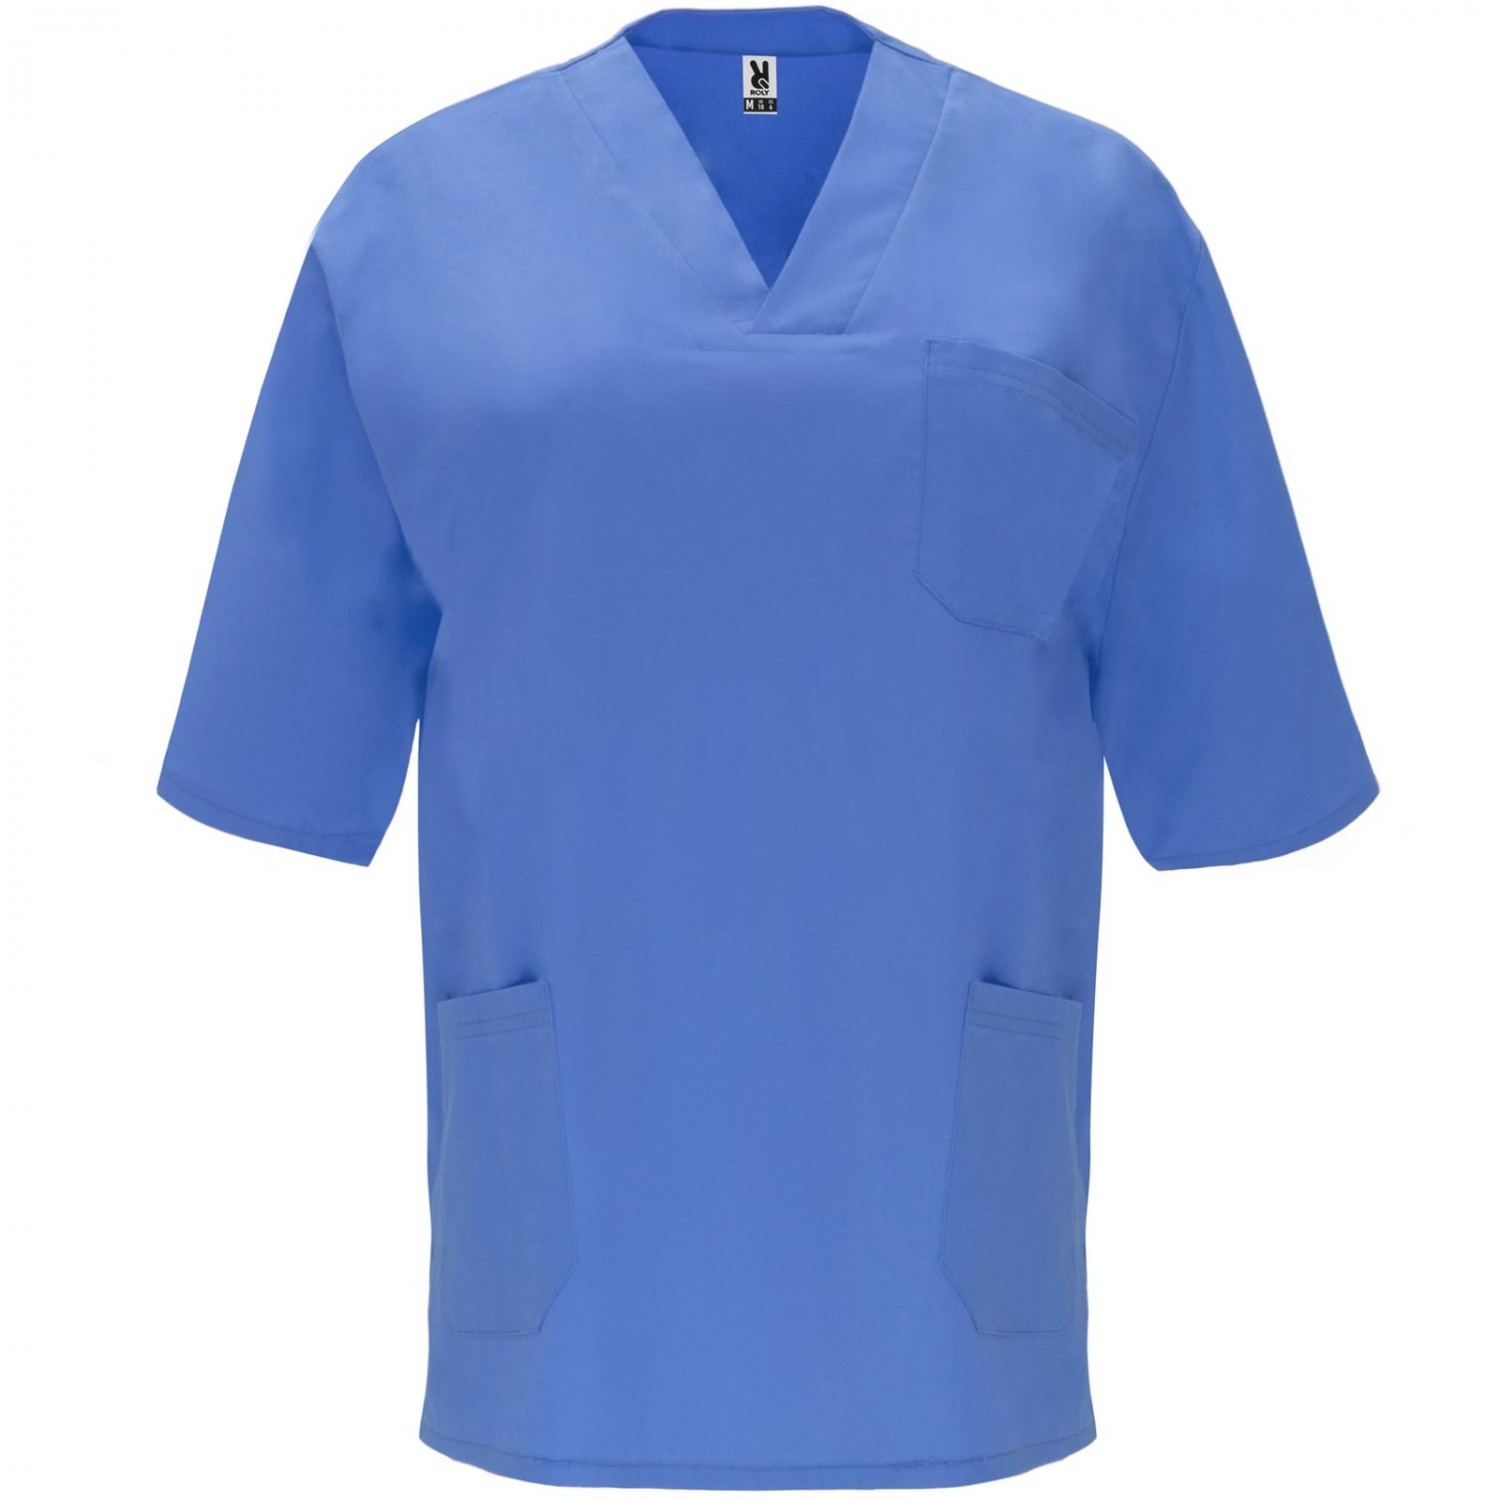 Schlupfkasack Medizin Pflege Unisex Hemd Jacke (Farbe: OP-blau Größe: XS)